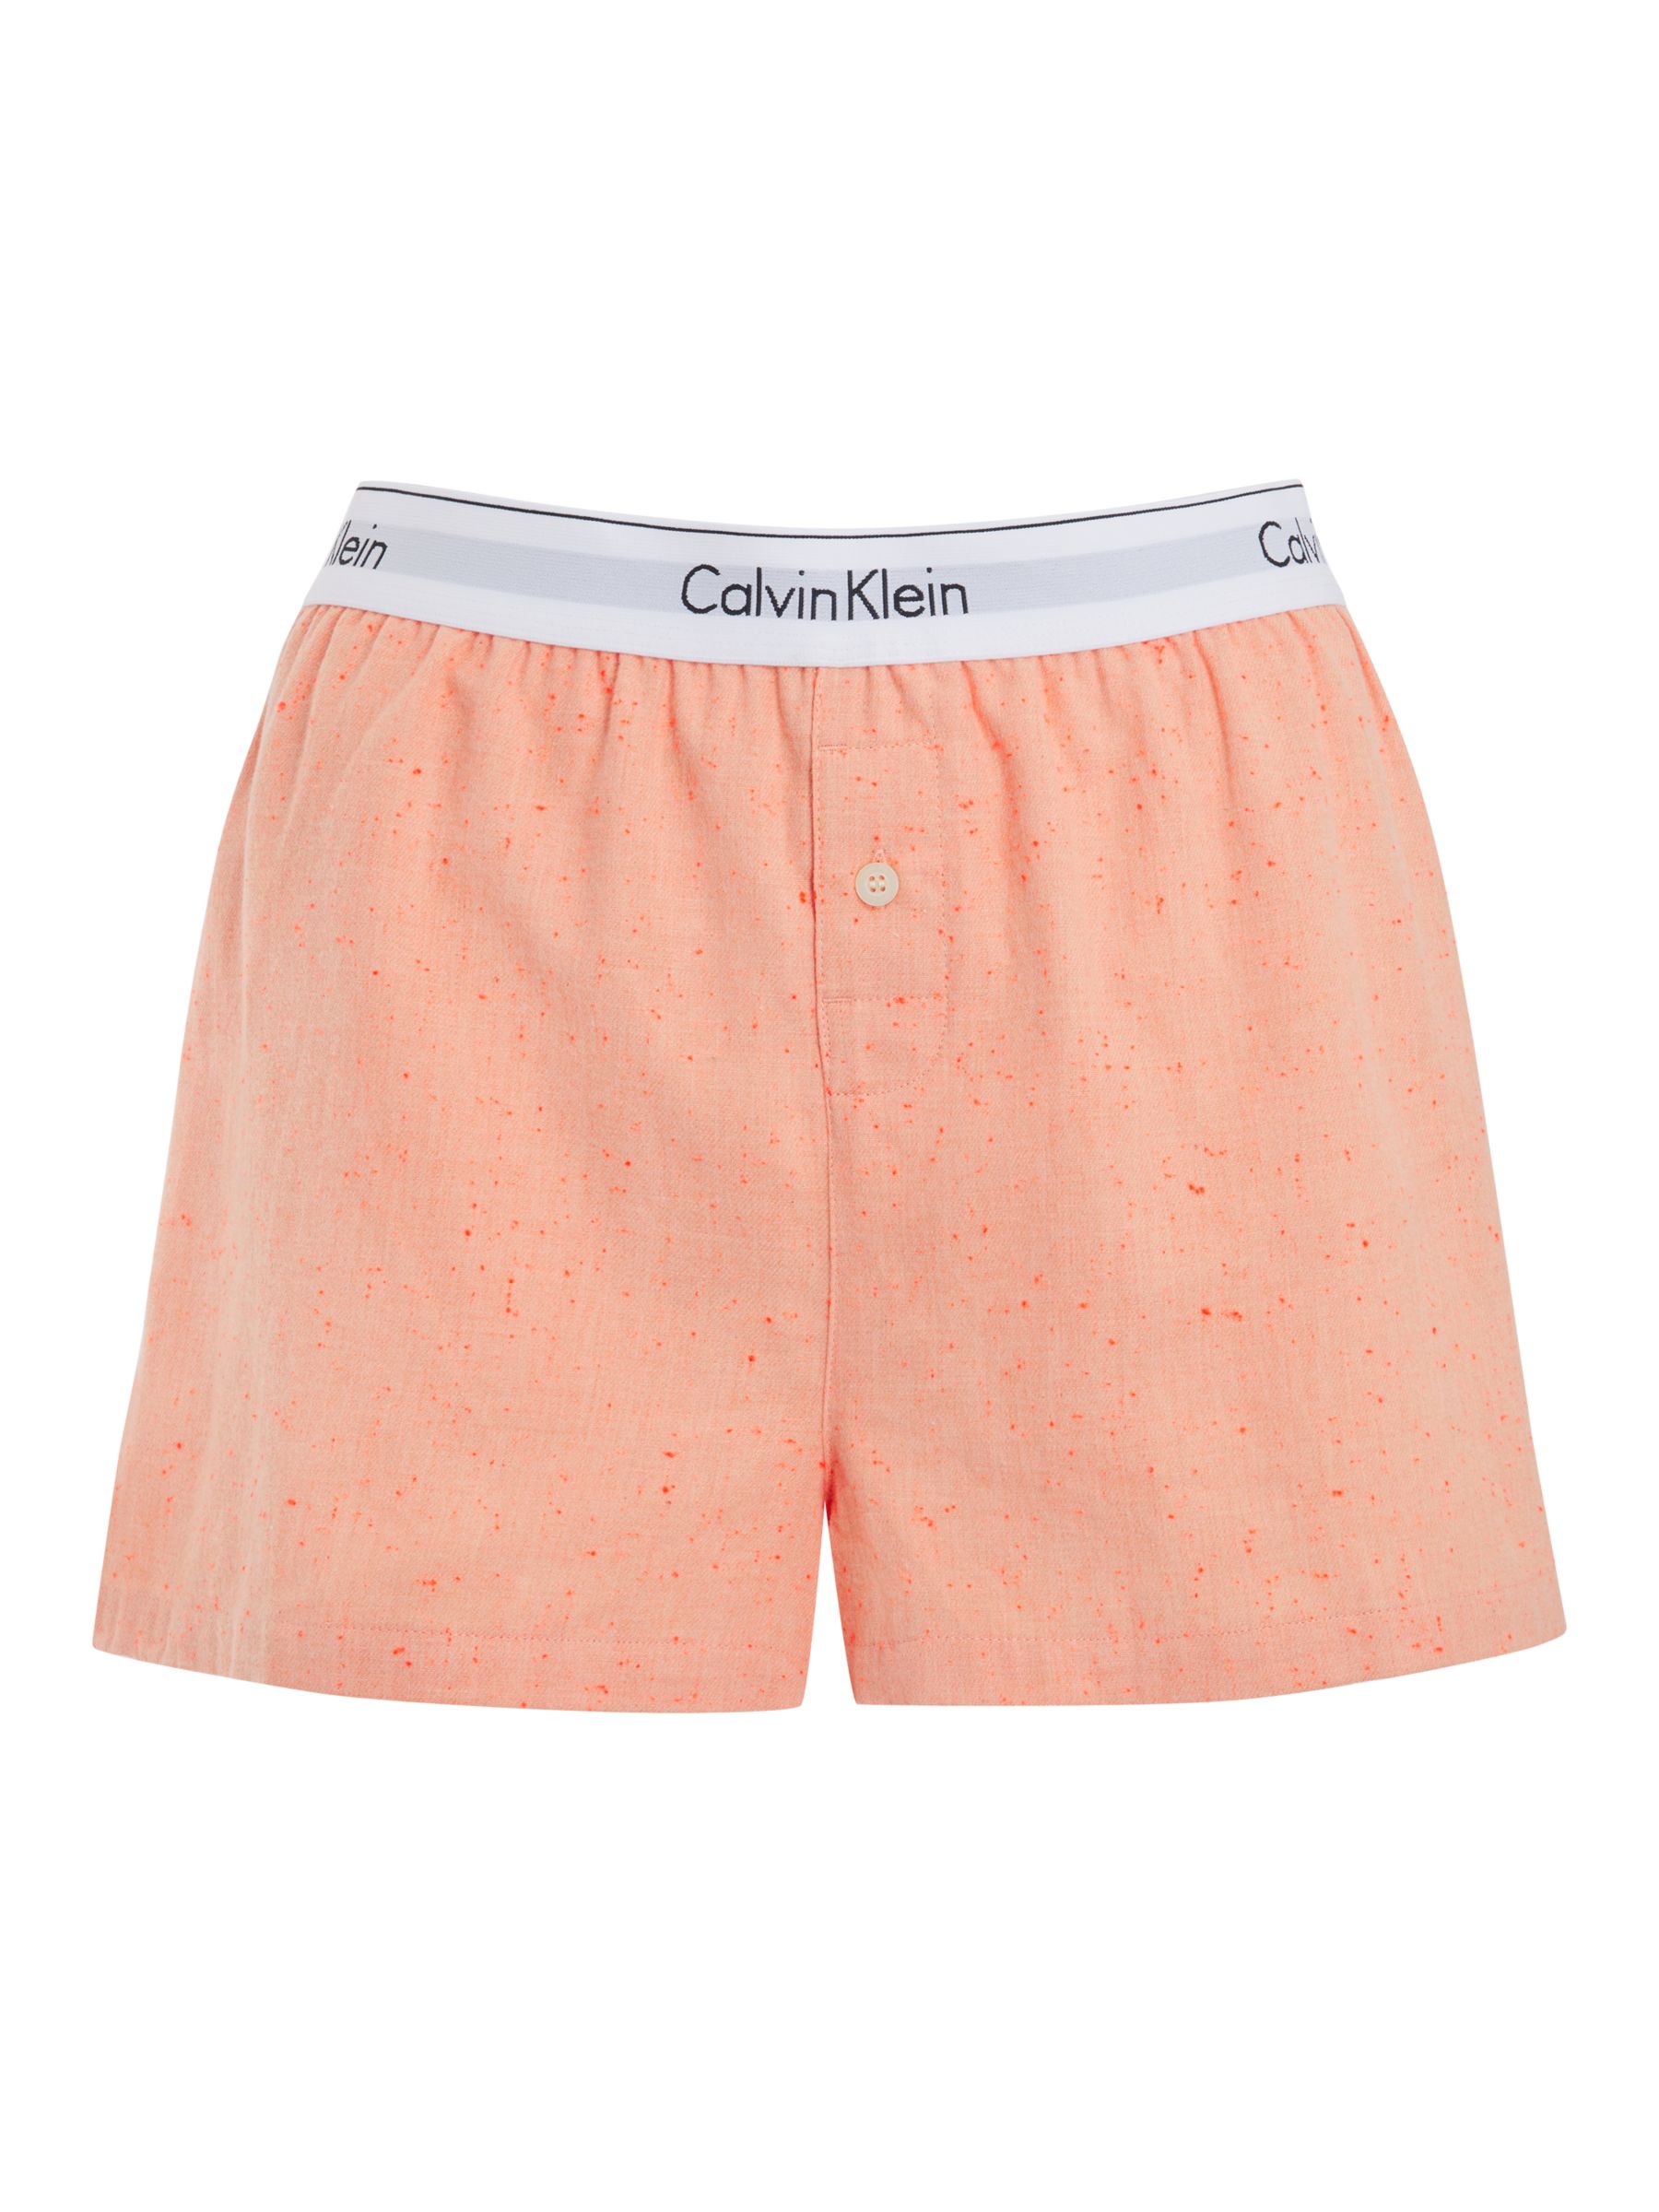 calvin klein sleep shorts